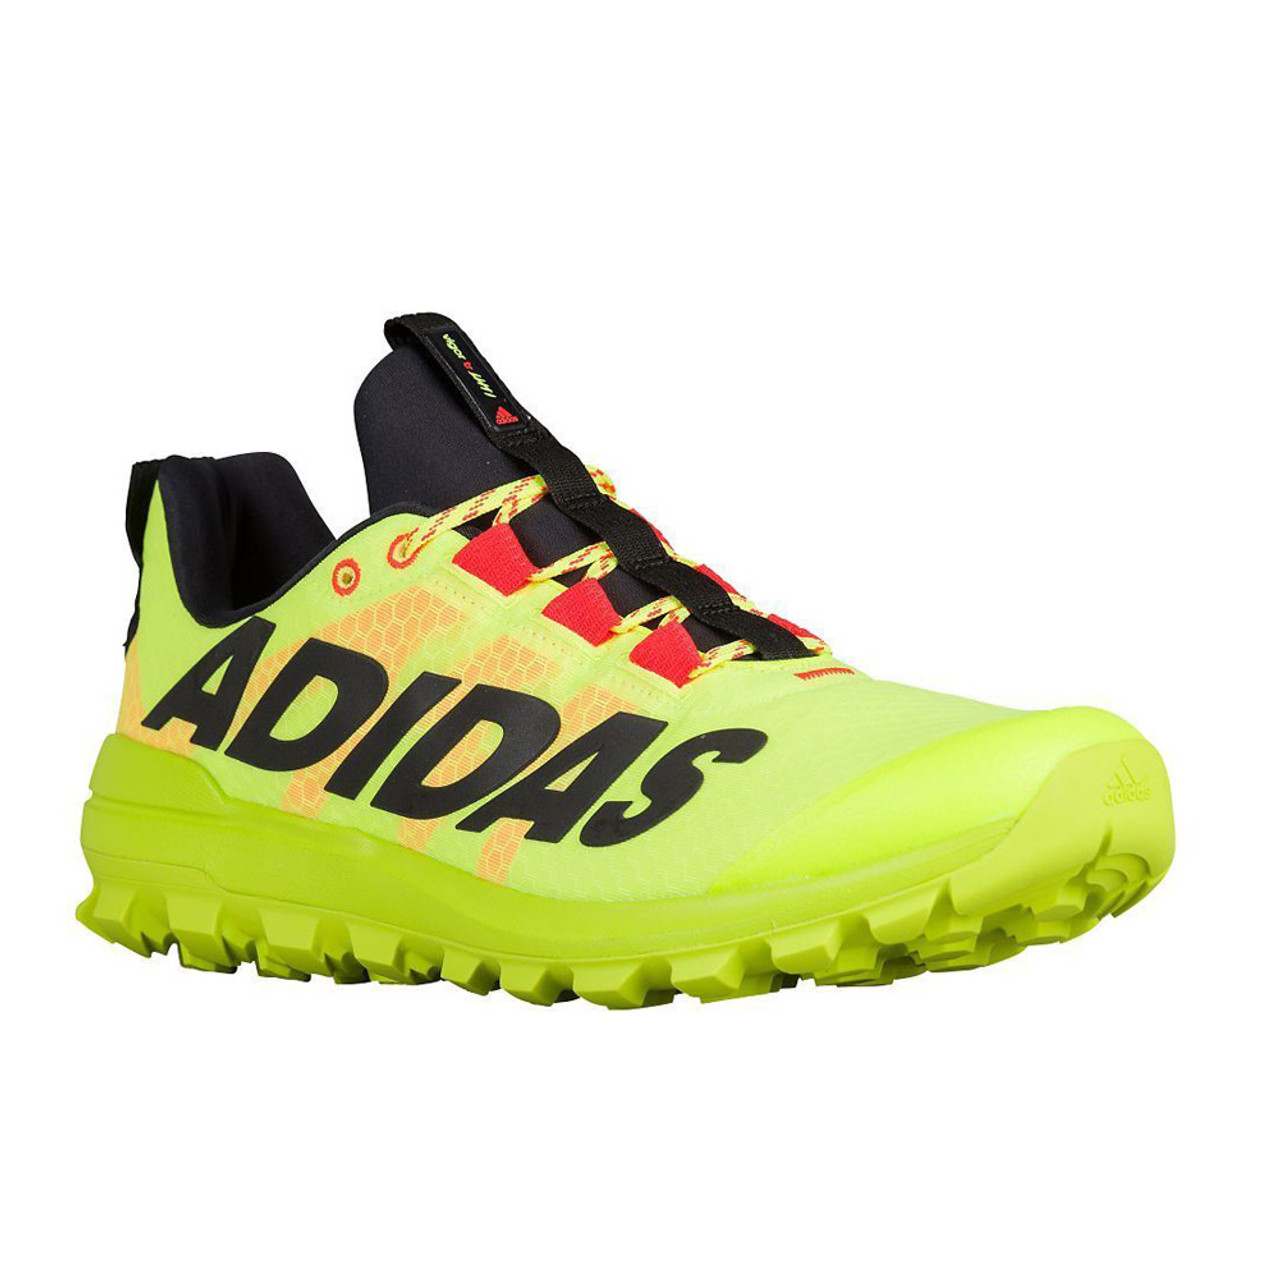 Adidas Men's Vigor TR Trail Runner - Yellow | Discount Adidas Athletic Shoes & More - Shoolu.com |